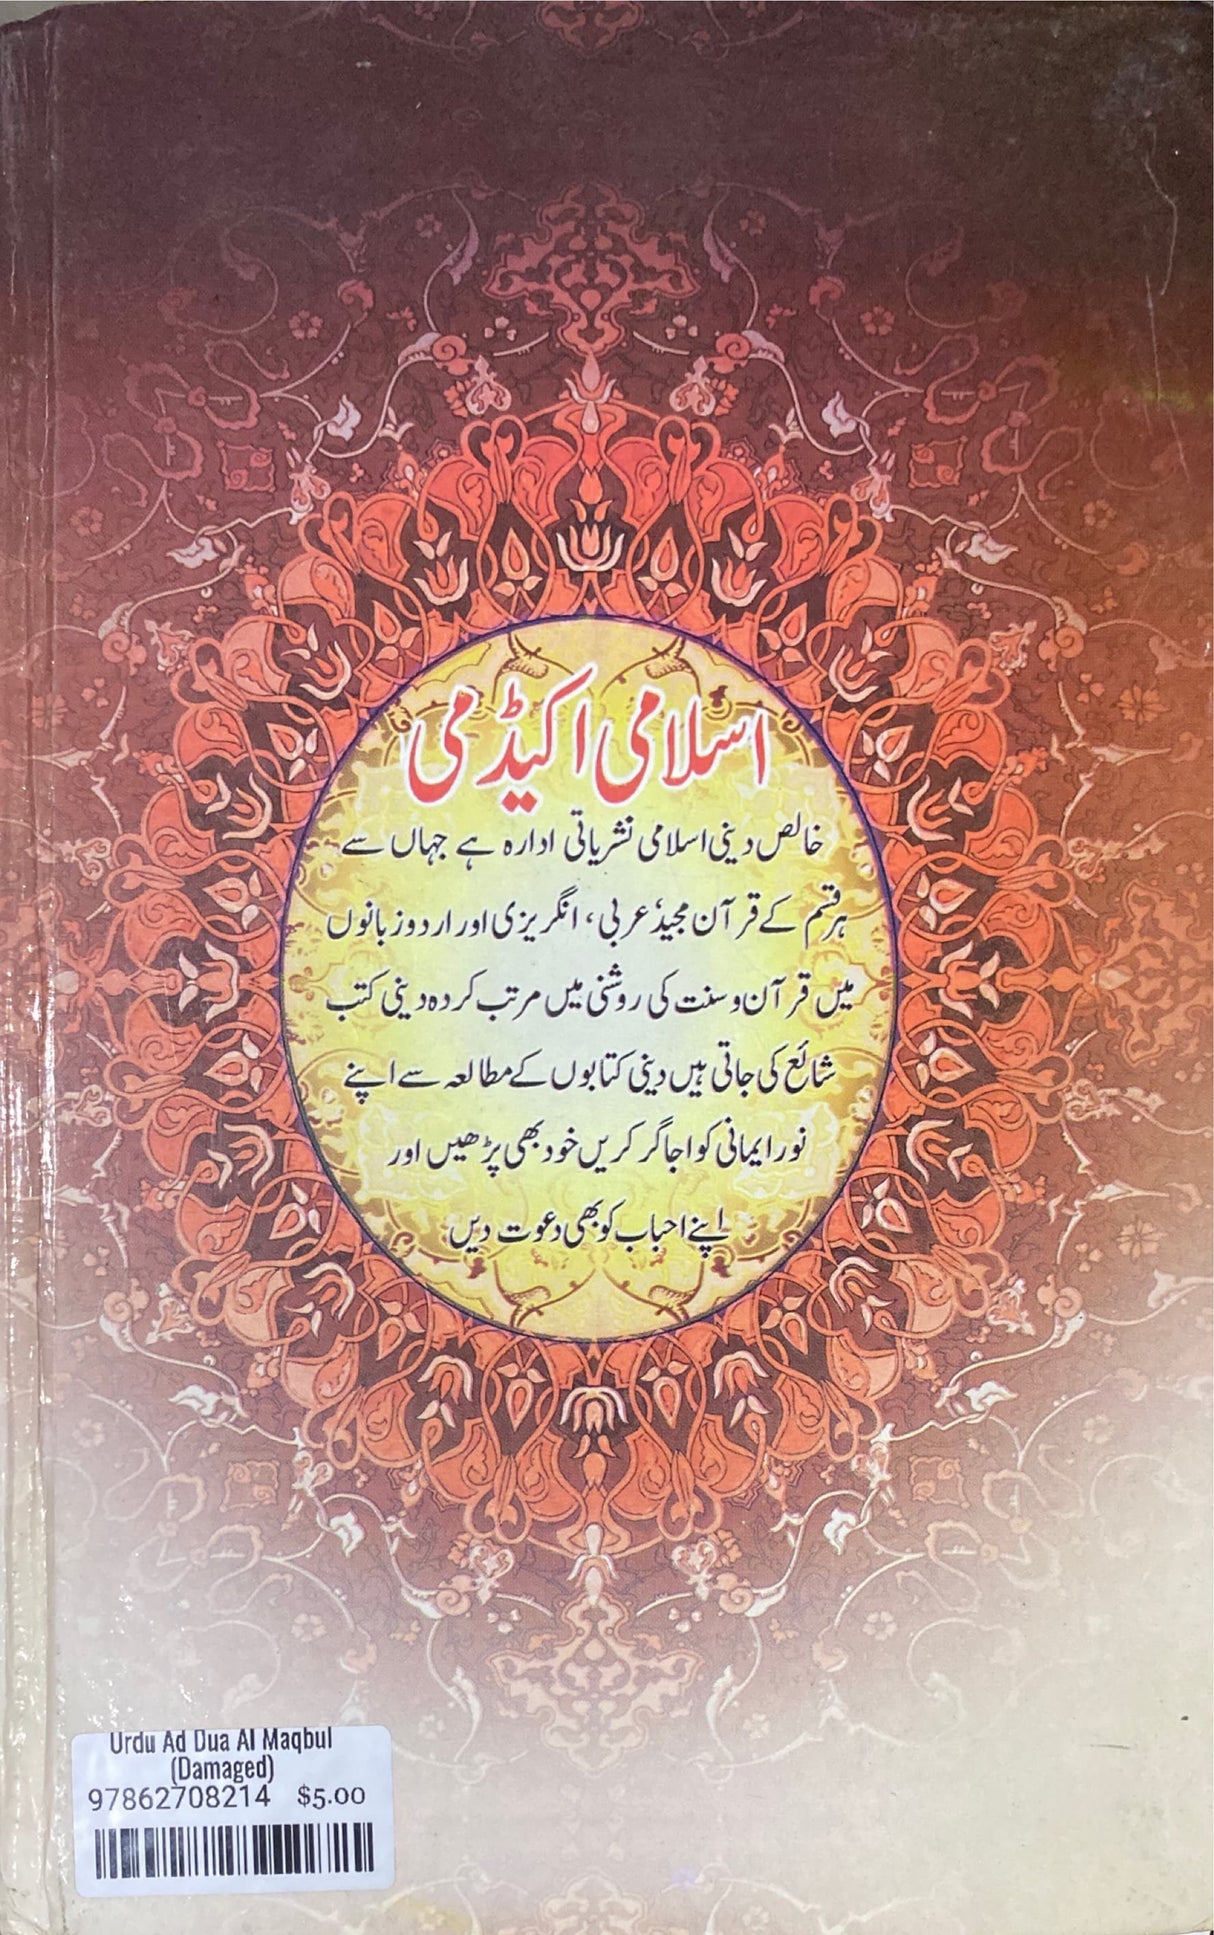 Urdu Ad Dua Al Maqbul (Damaged)